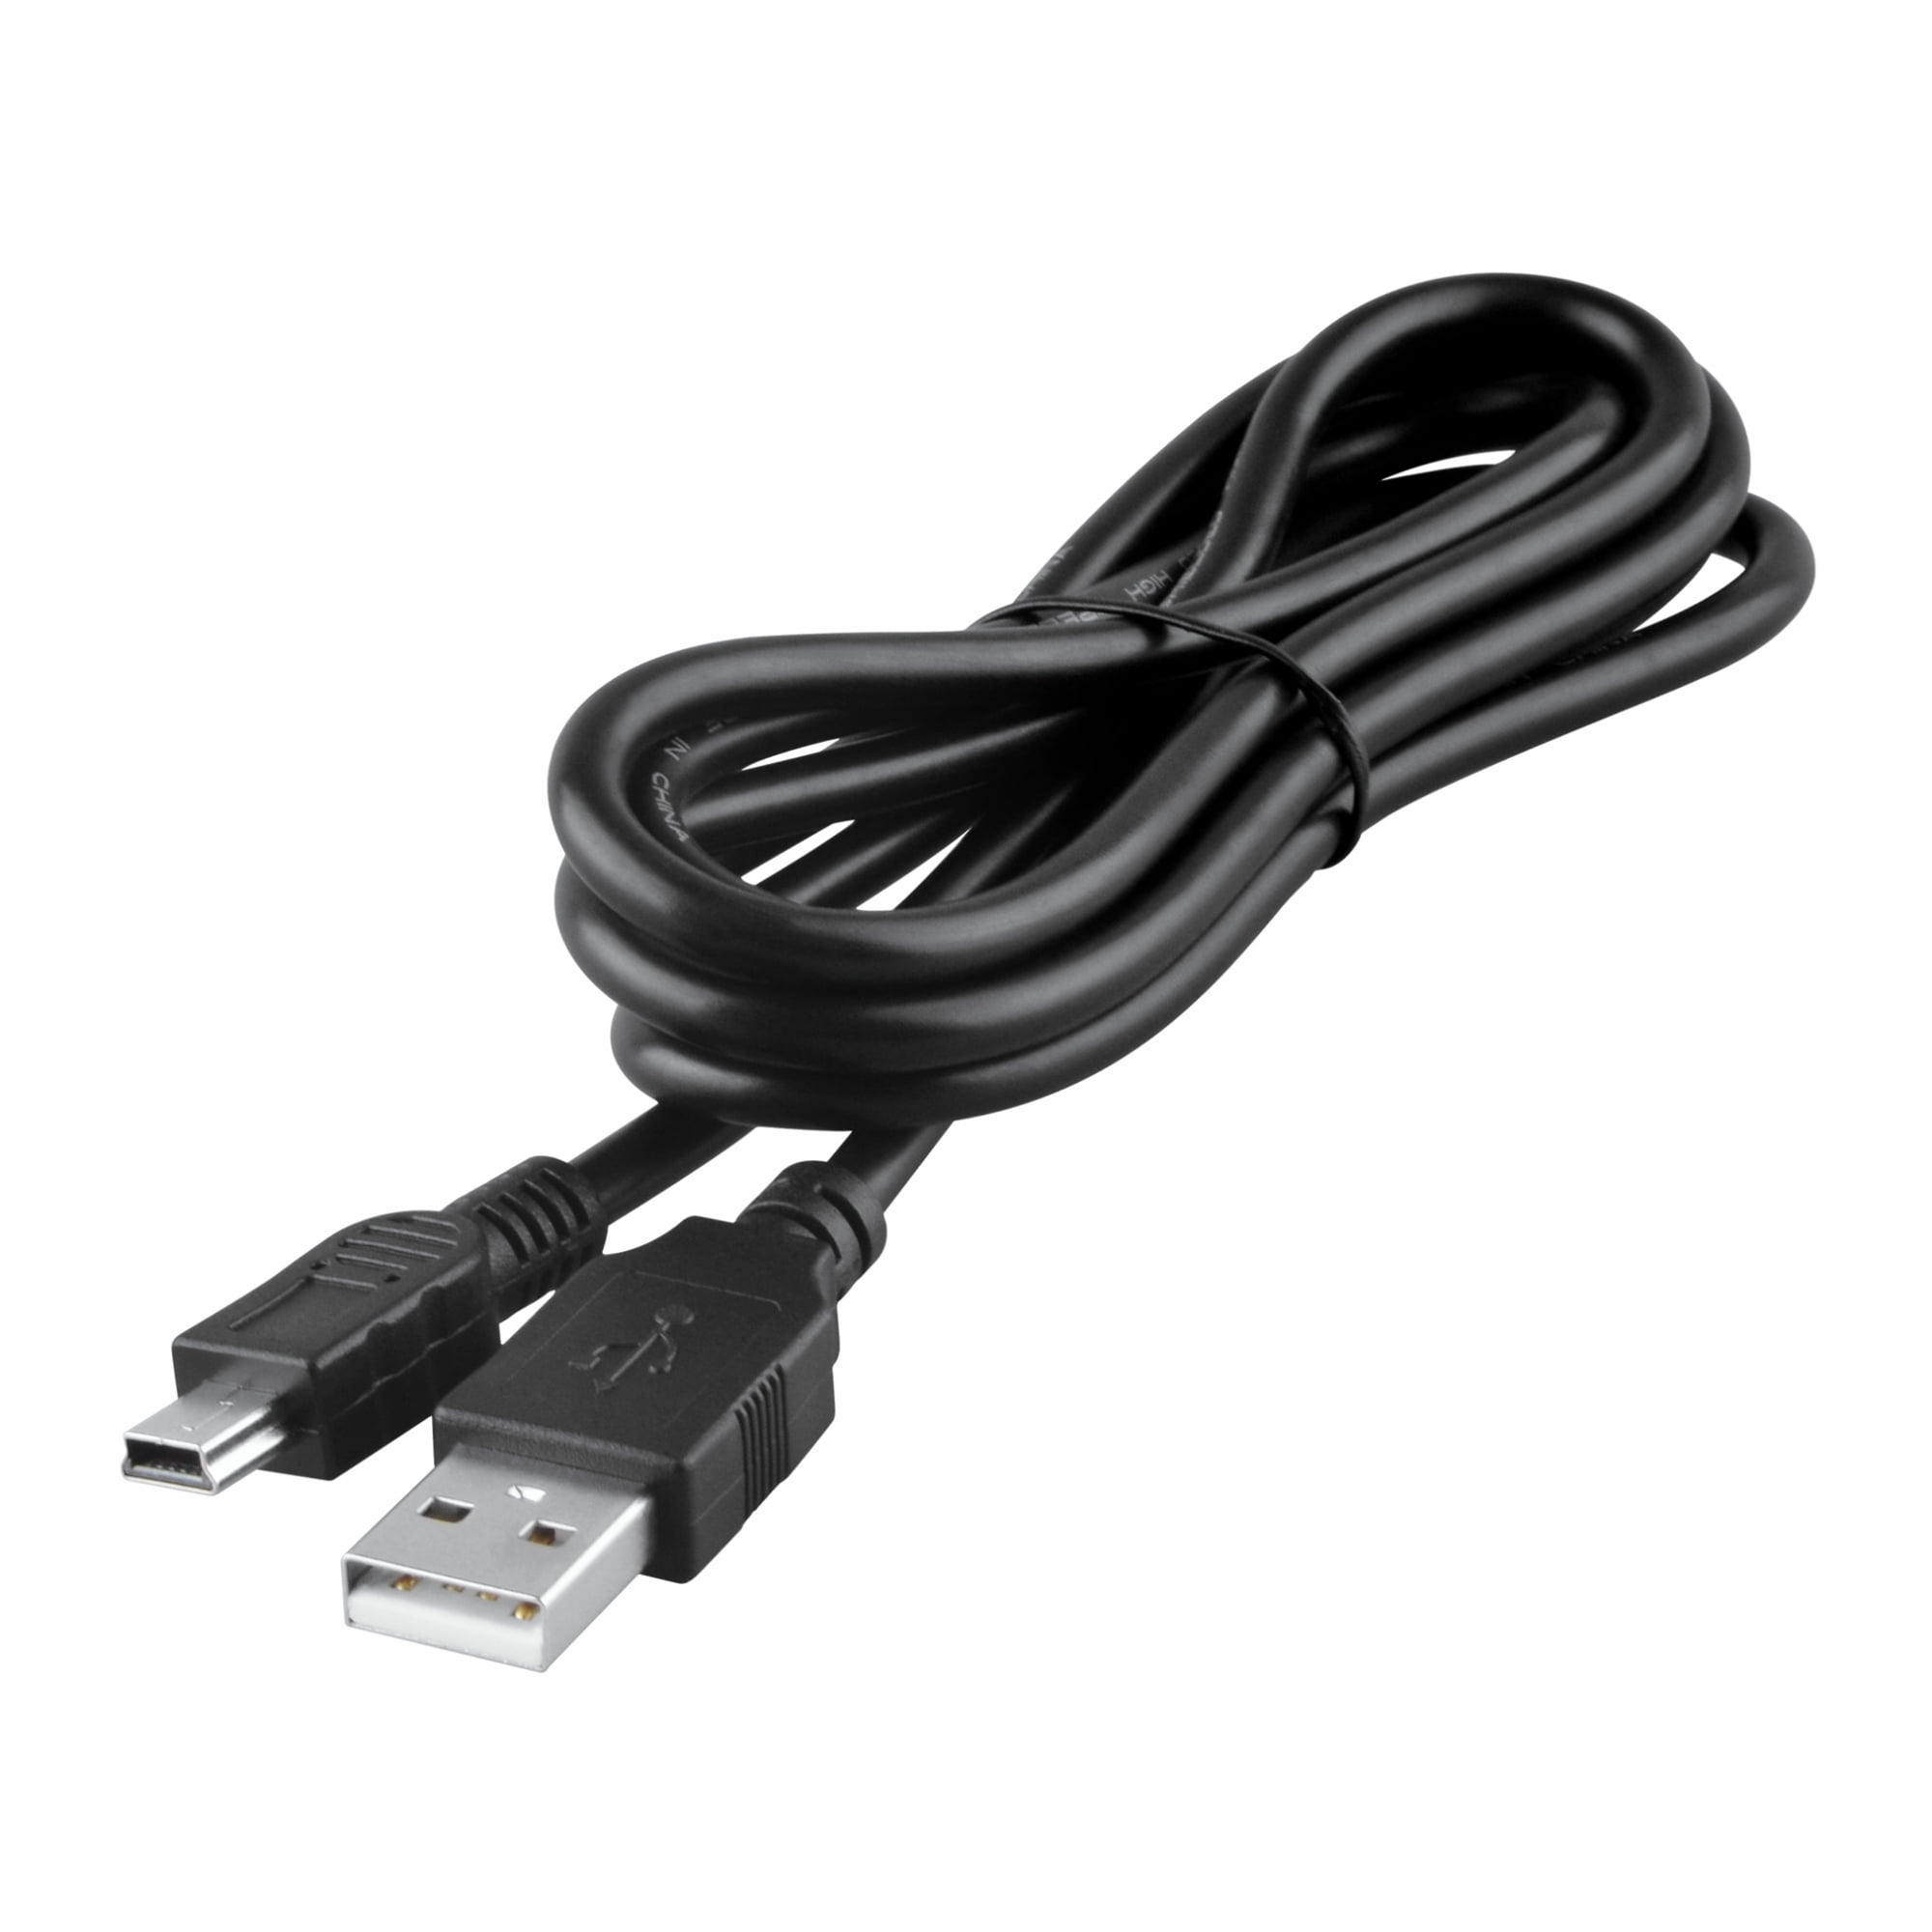 SONY  K1HA05CD0014,K1HA05CD0016 CAMERA USB DATA SYNC CABLE LEAD FOR PC AND MAC 